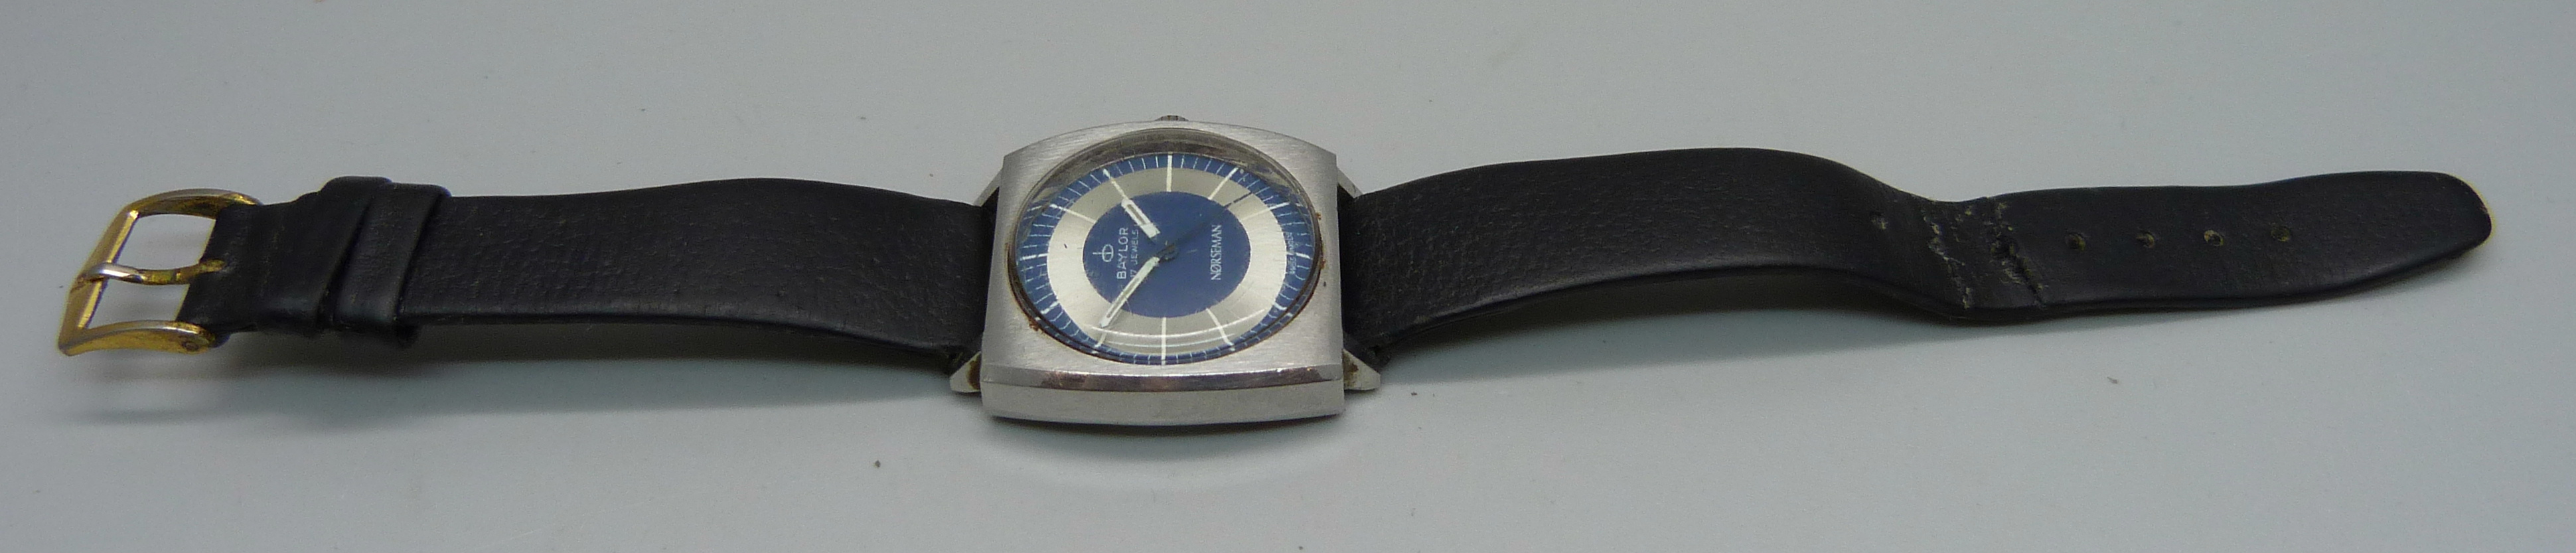 A 1970's Baylor Norseman, Swiss made, 17 jewel movement wristwatch - Image 7 of 7